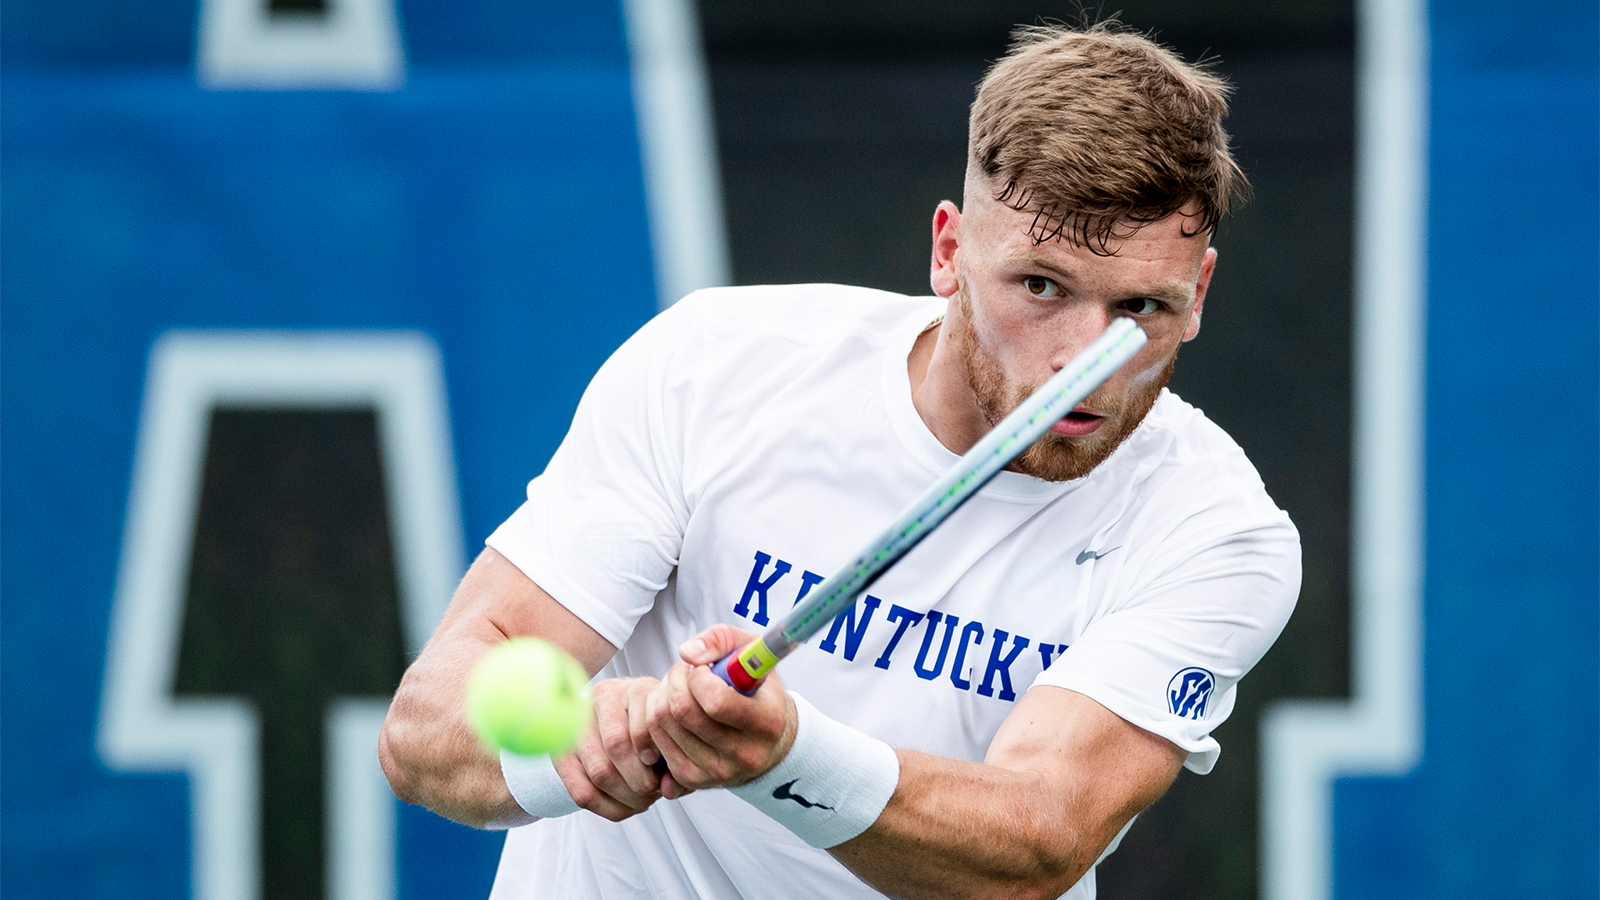 Kentucky Men’s Tennis Finishes Season as National Runner-Up